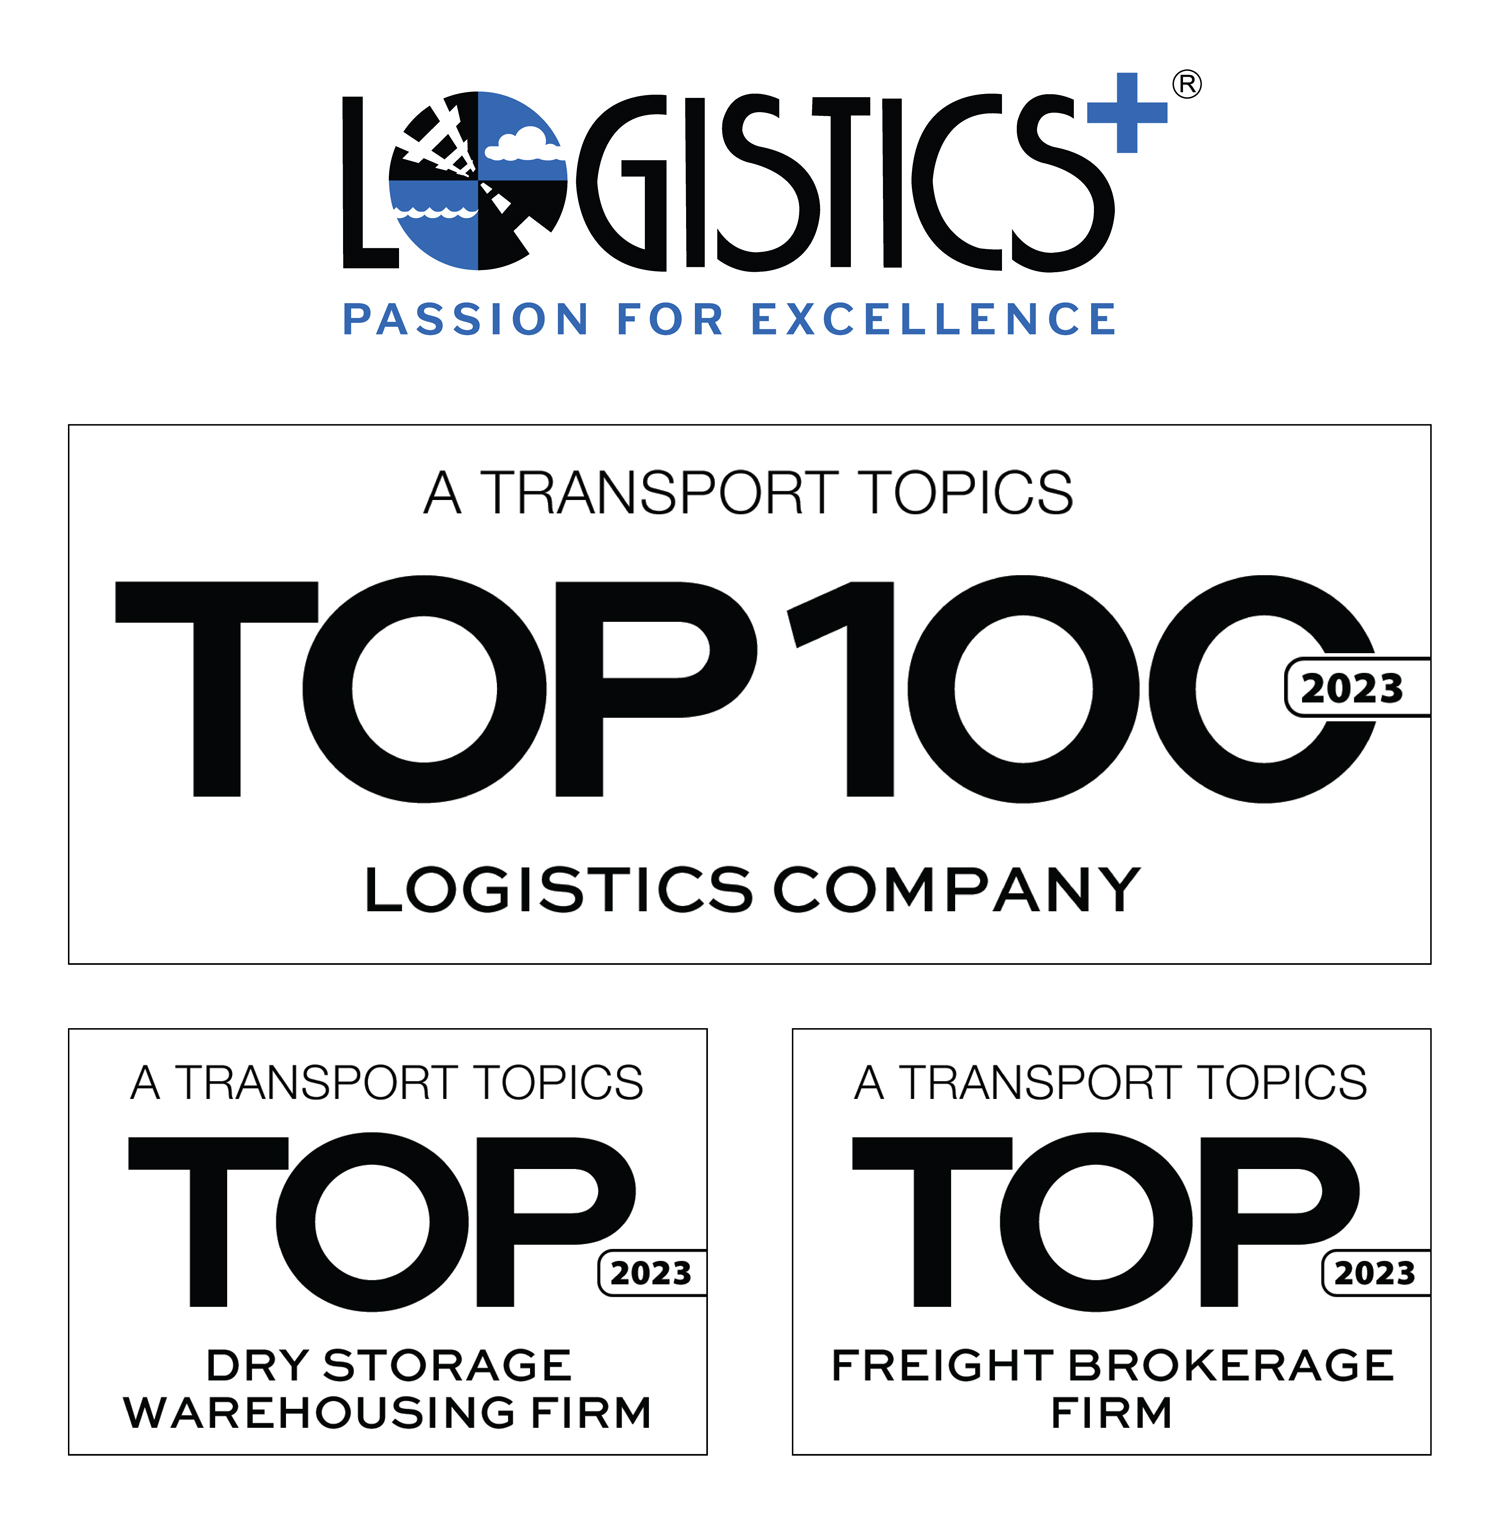 Logistics Plus Ranks Among Transport Topics 2023 Top 100 Logistics Companies